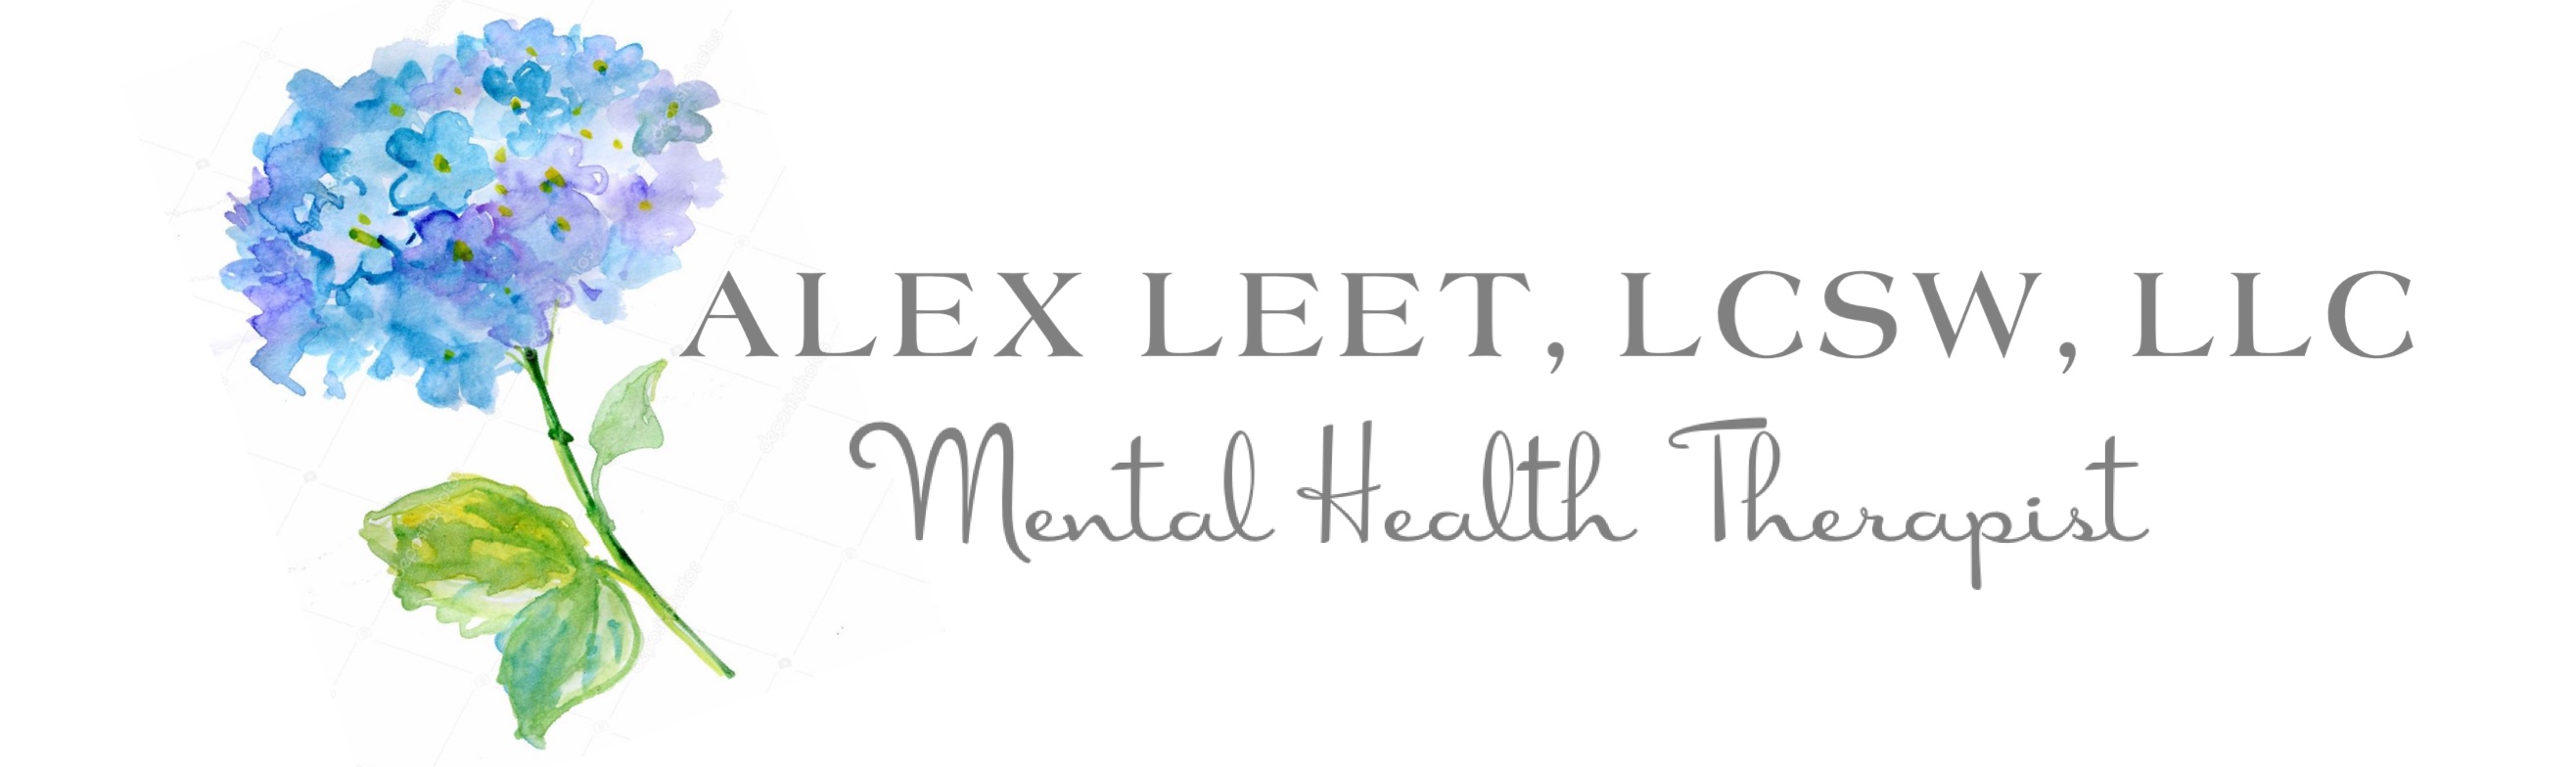 Alex Leet, LCSW, LLC